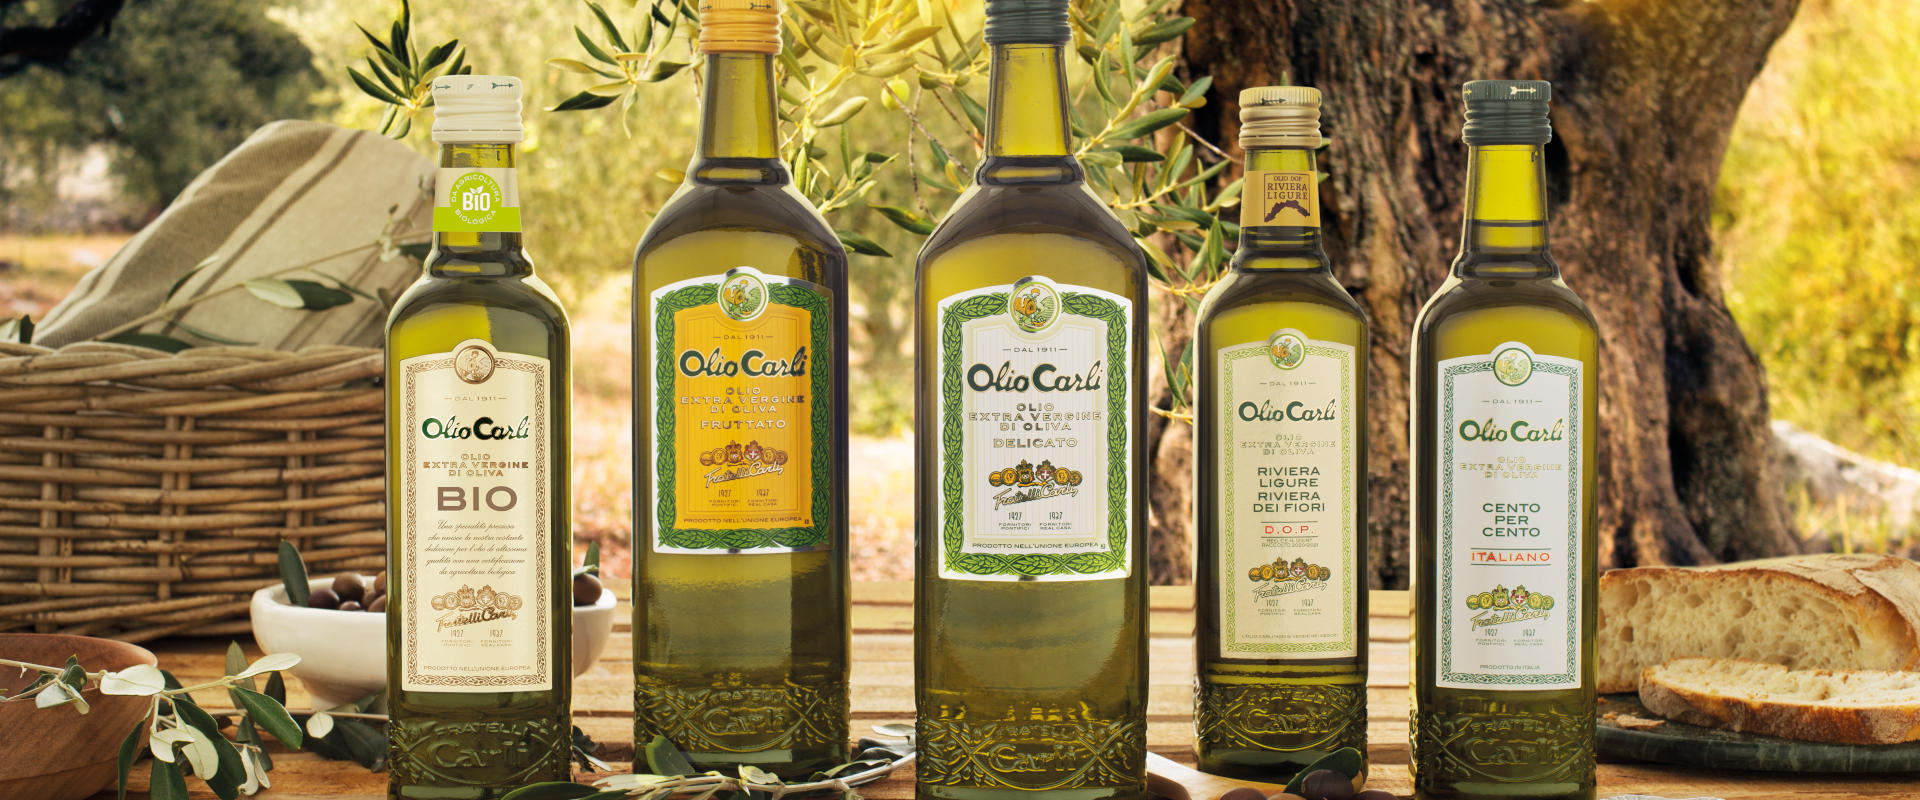 Native Olivenöle extra Carli